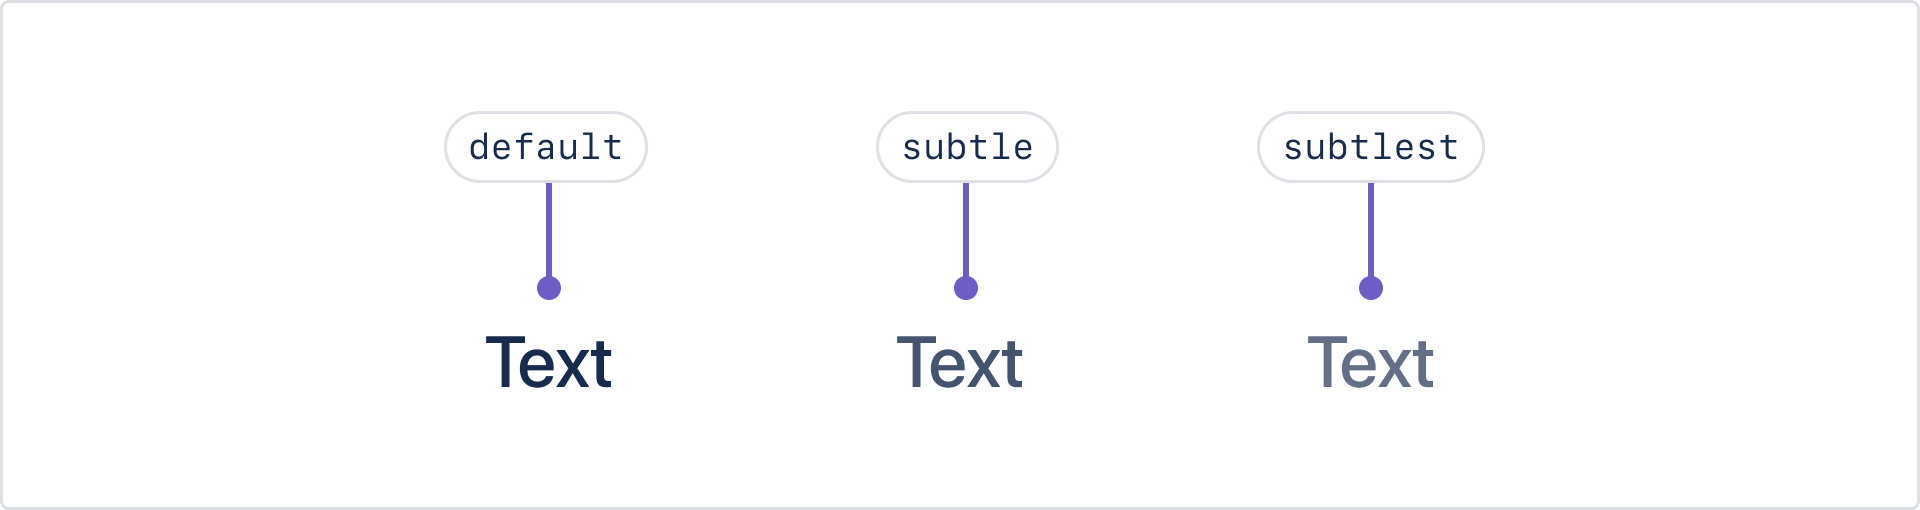 Comparing differences between default, subtle, and subtlest text. Default text has the highest contrast, subtlest has the least.